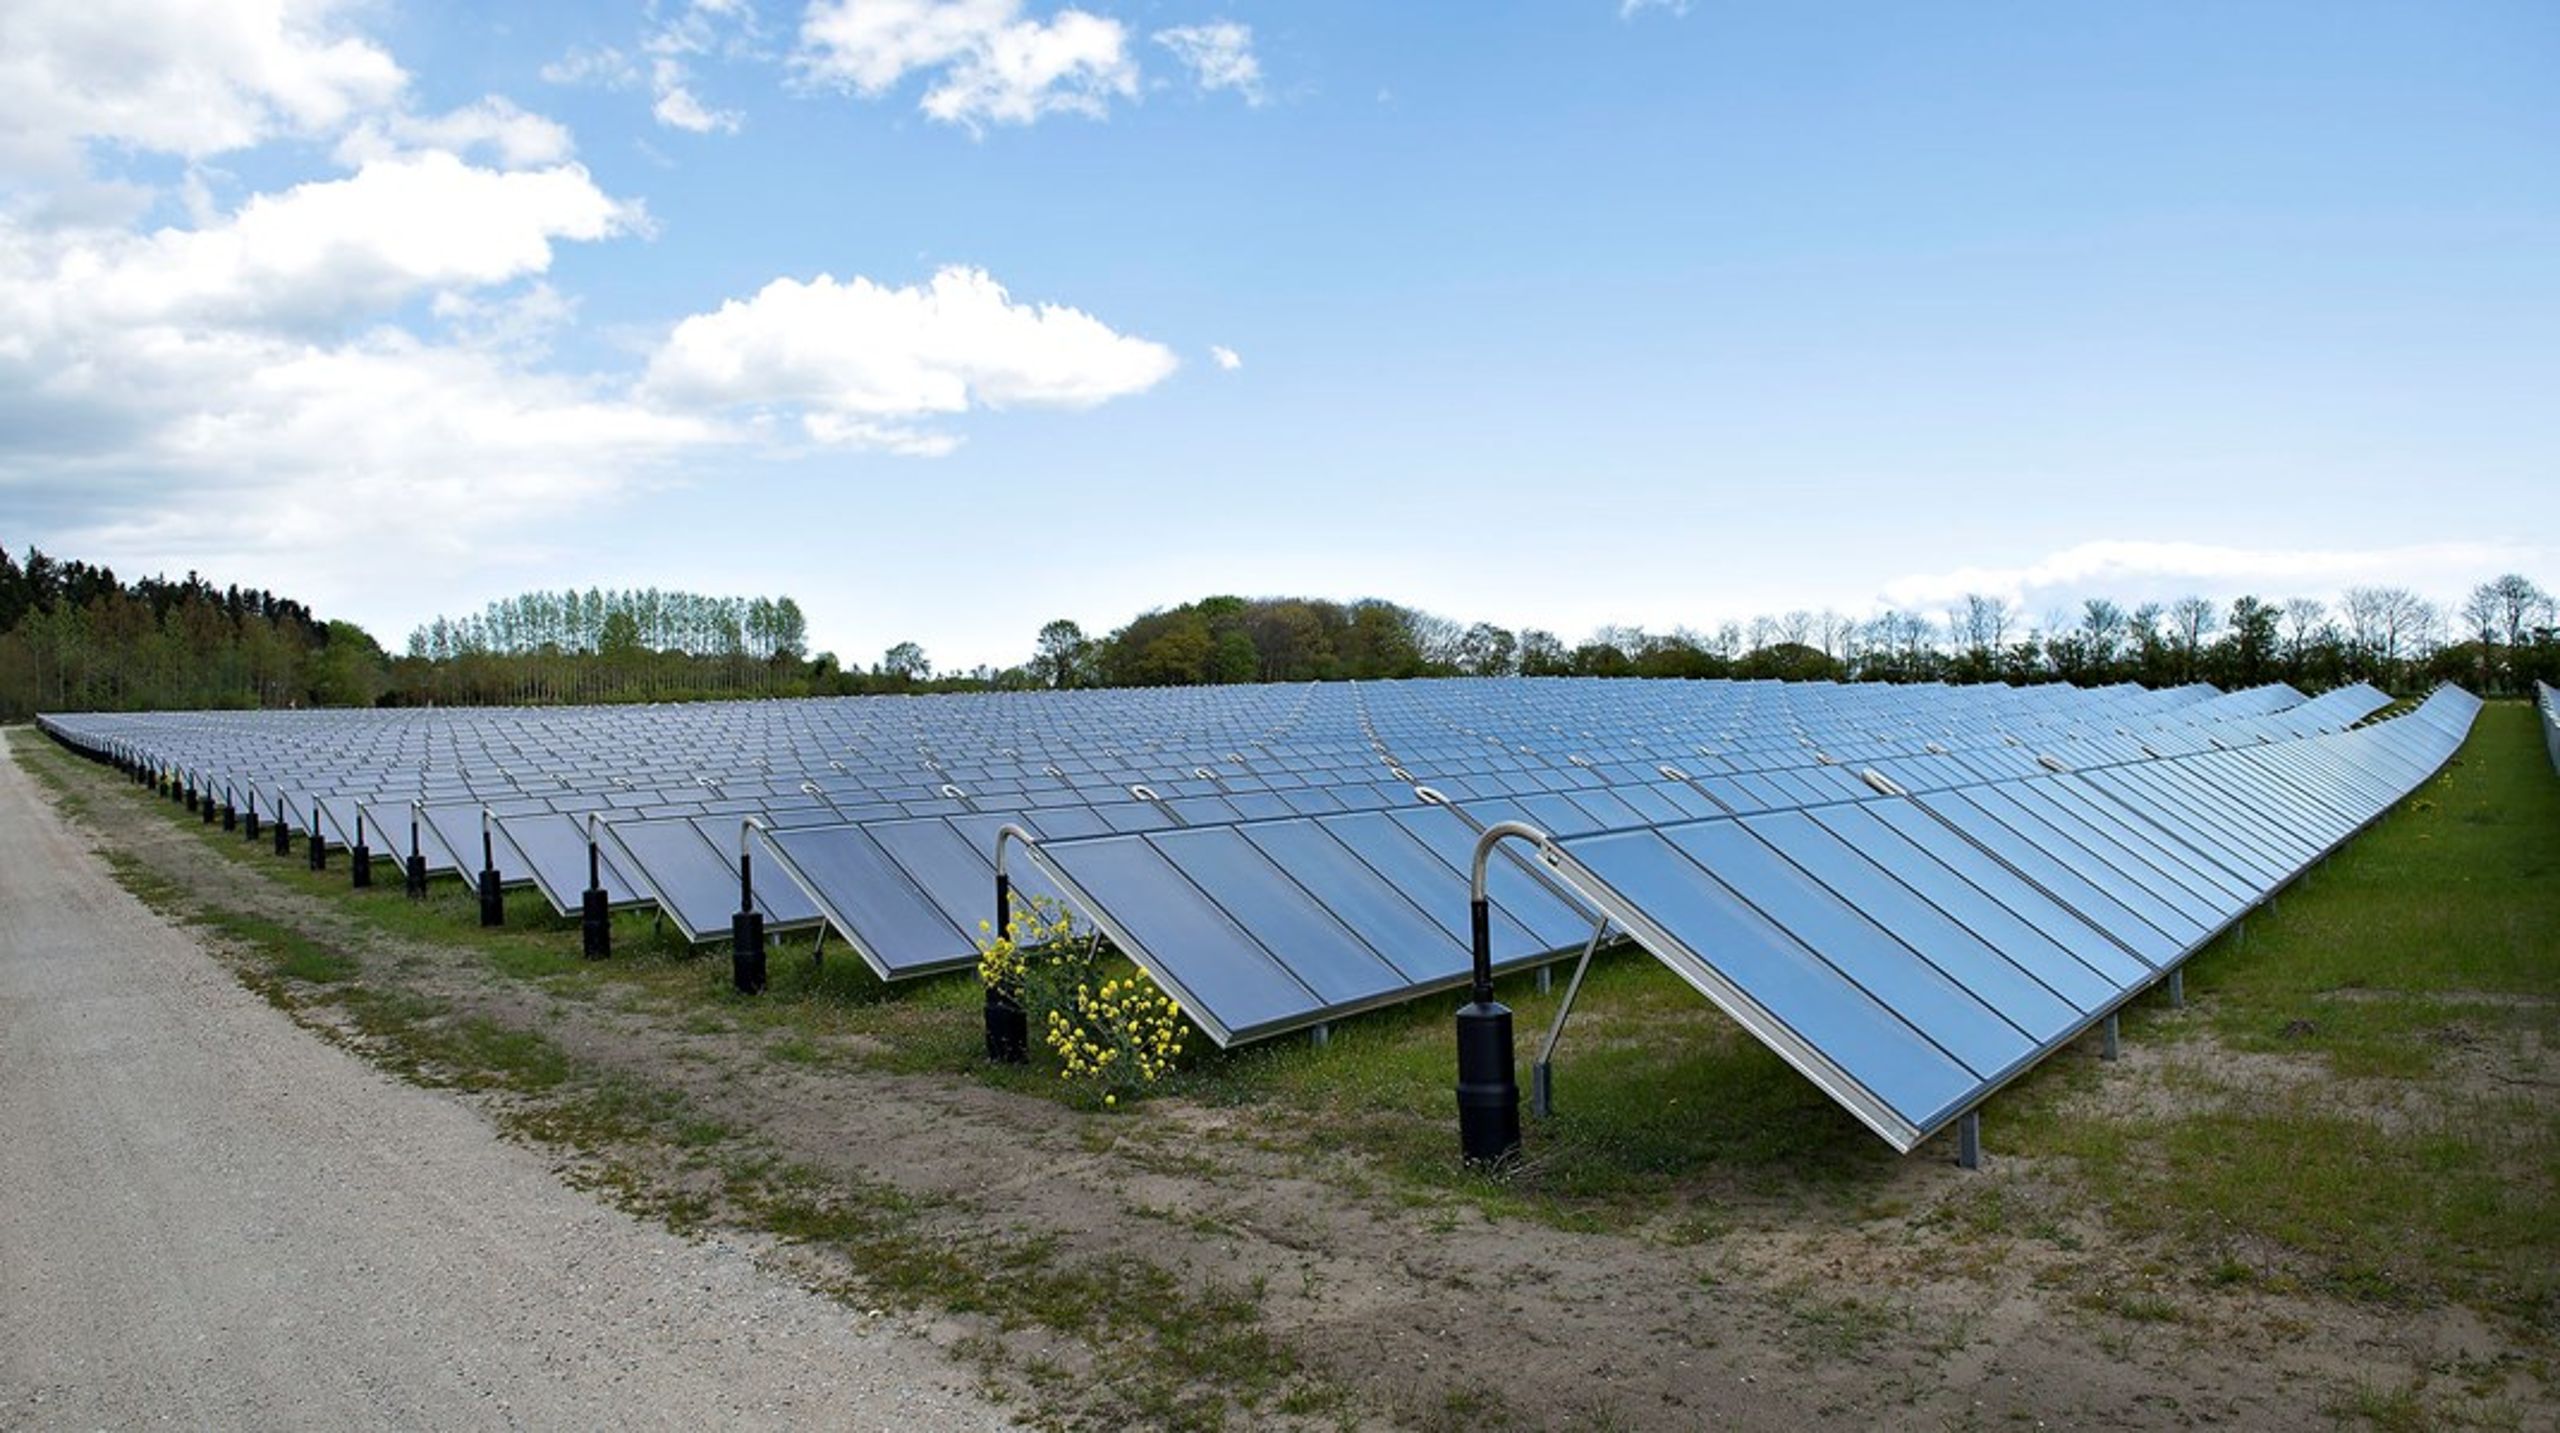 Solcellebranchen&nbsp;er gået sammen i en ny brancheforeningen kaldet Dansk Solkraft.